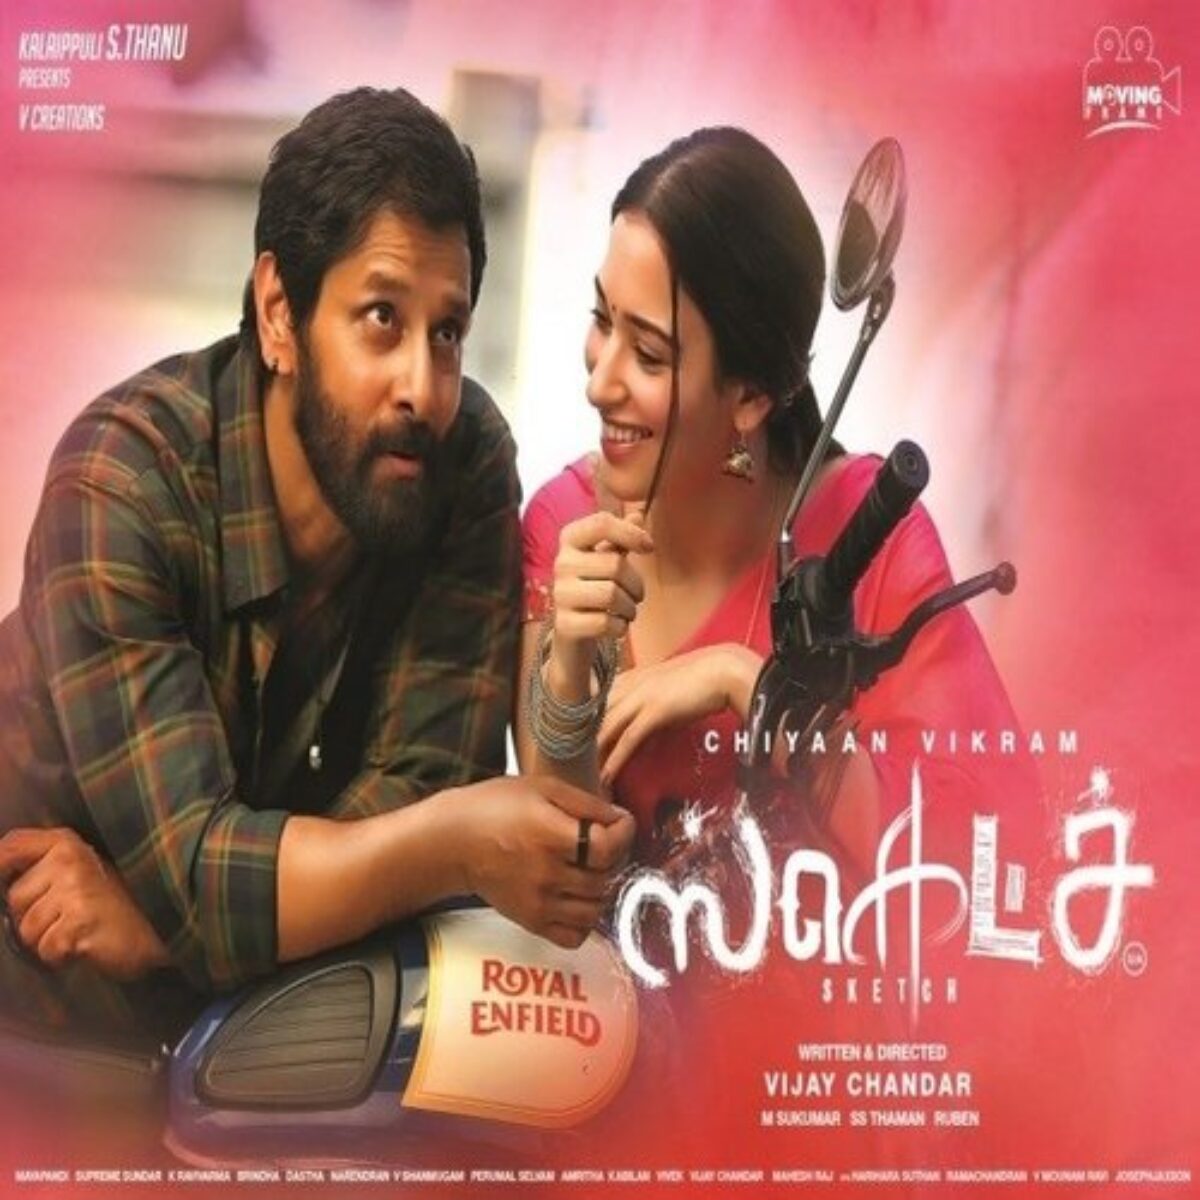 kamal hassan vikram tamil movie mp3 songs free download